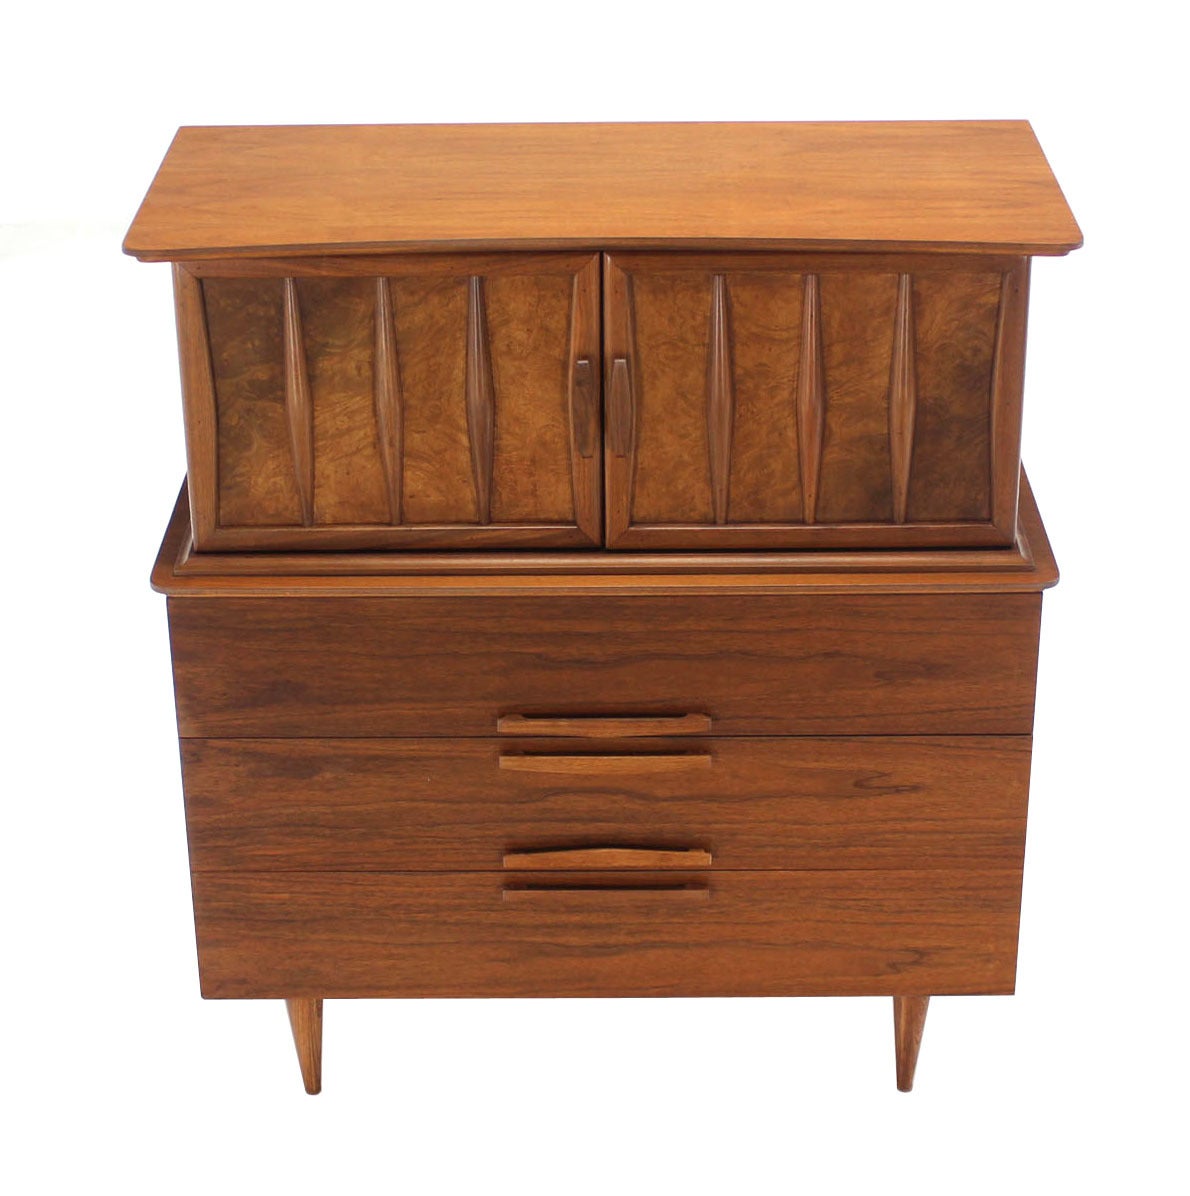 Very nice mid century modern walnut high chest or dresser.